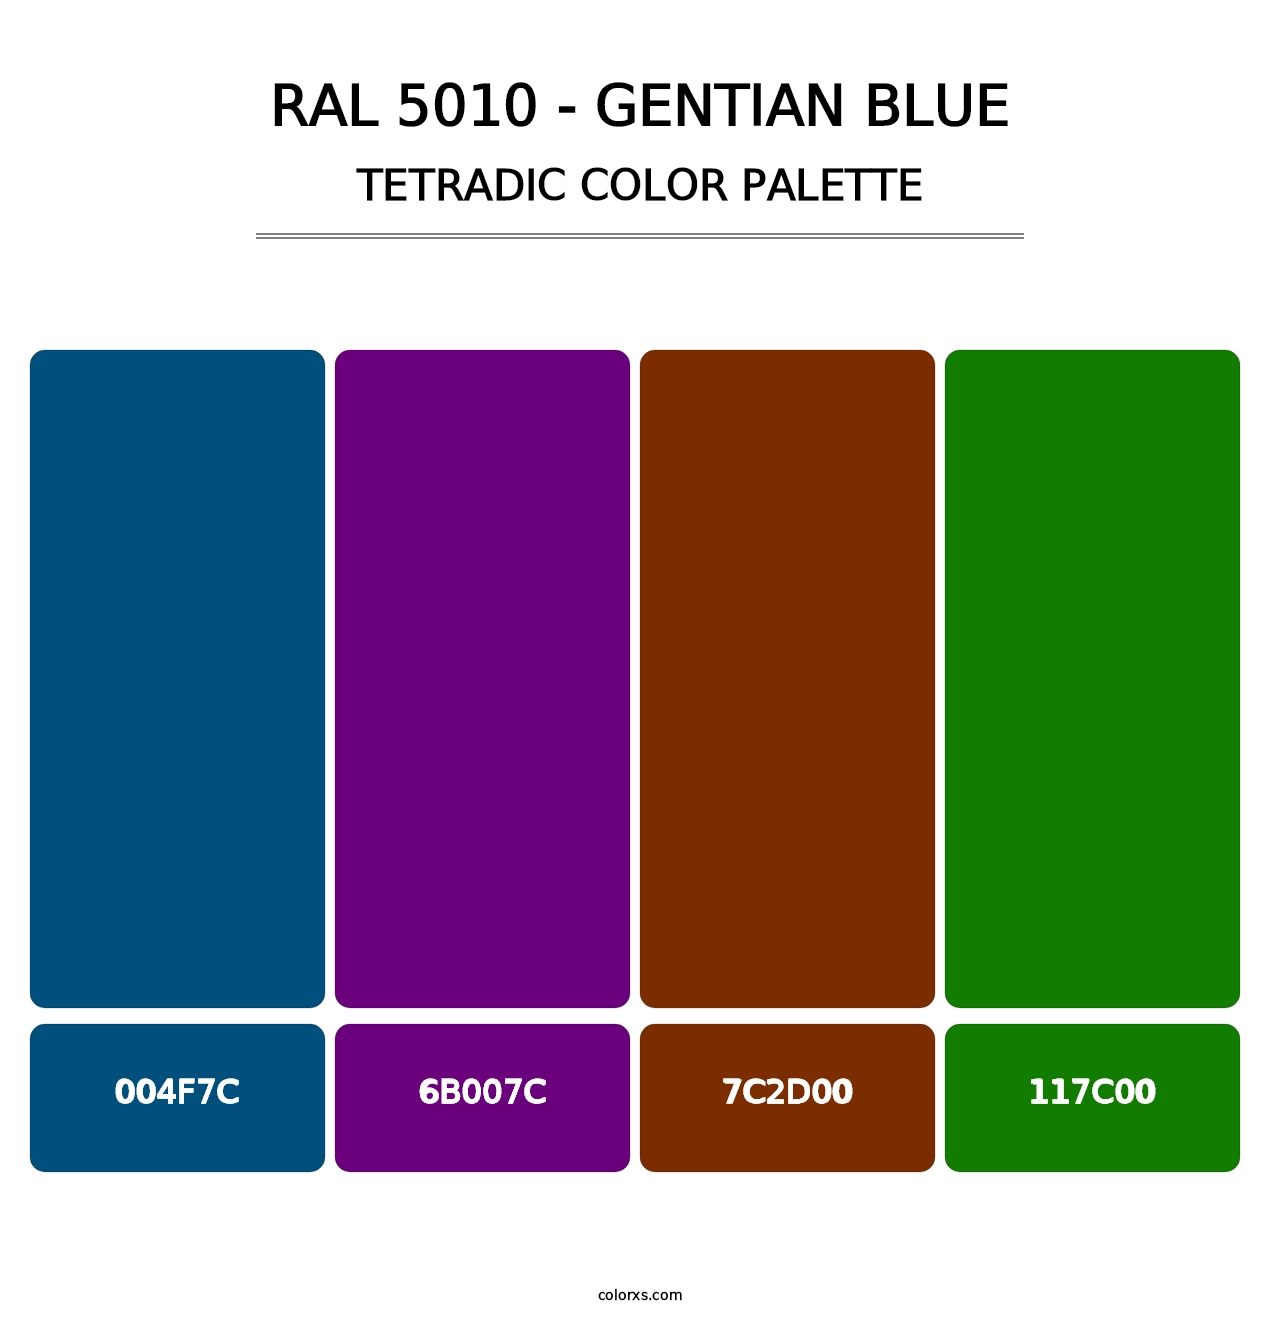 RAL 5010 - Gentian Blue - Tetradic Color Palette